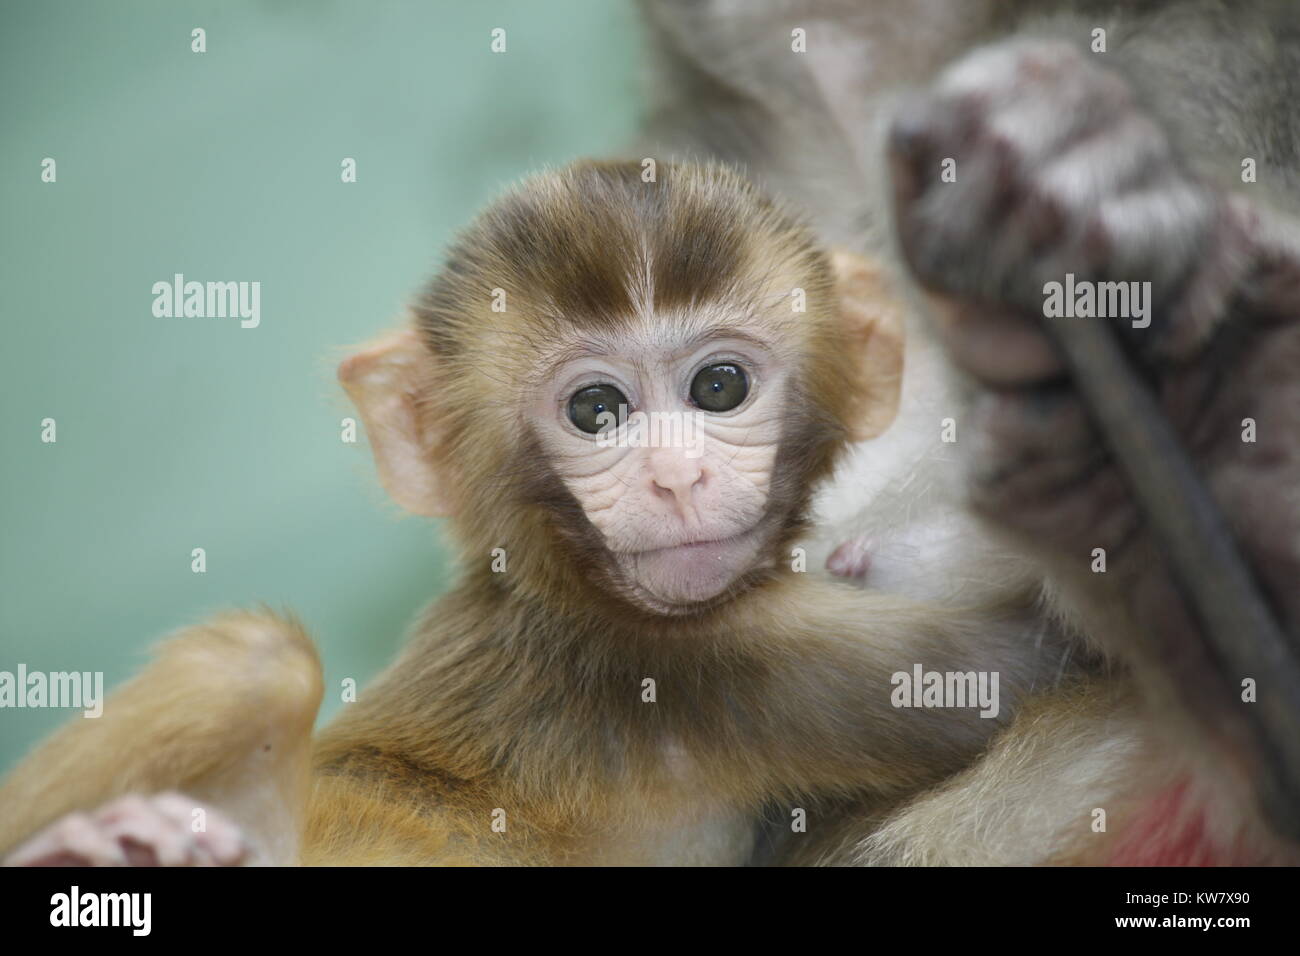 Capuchin Monkey Price Discount Buy, Save 44% | jlcatj.gob.mx